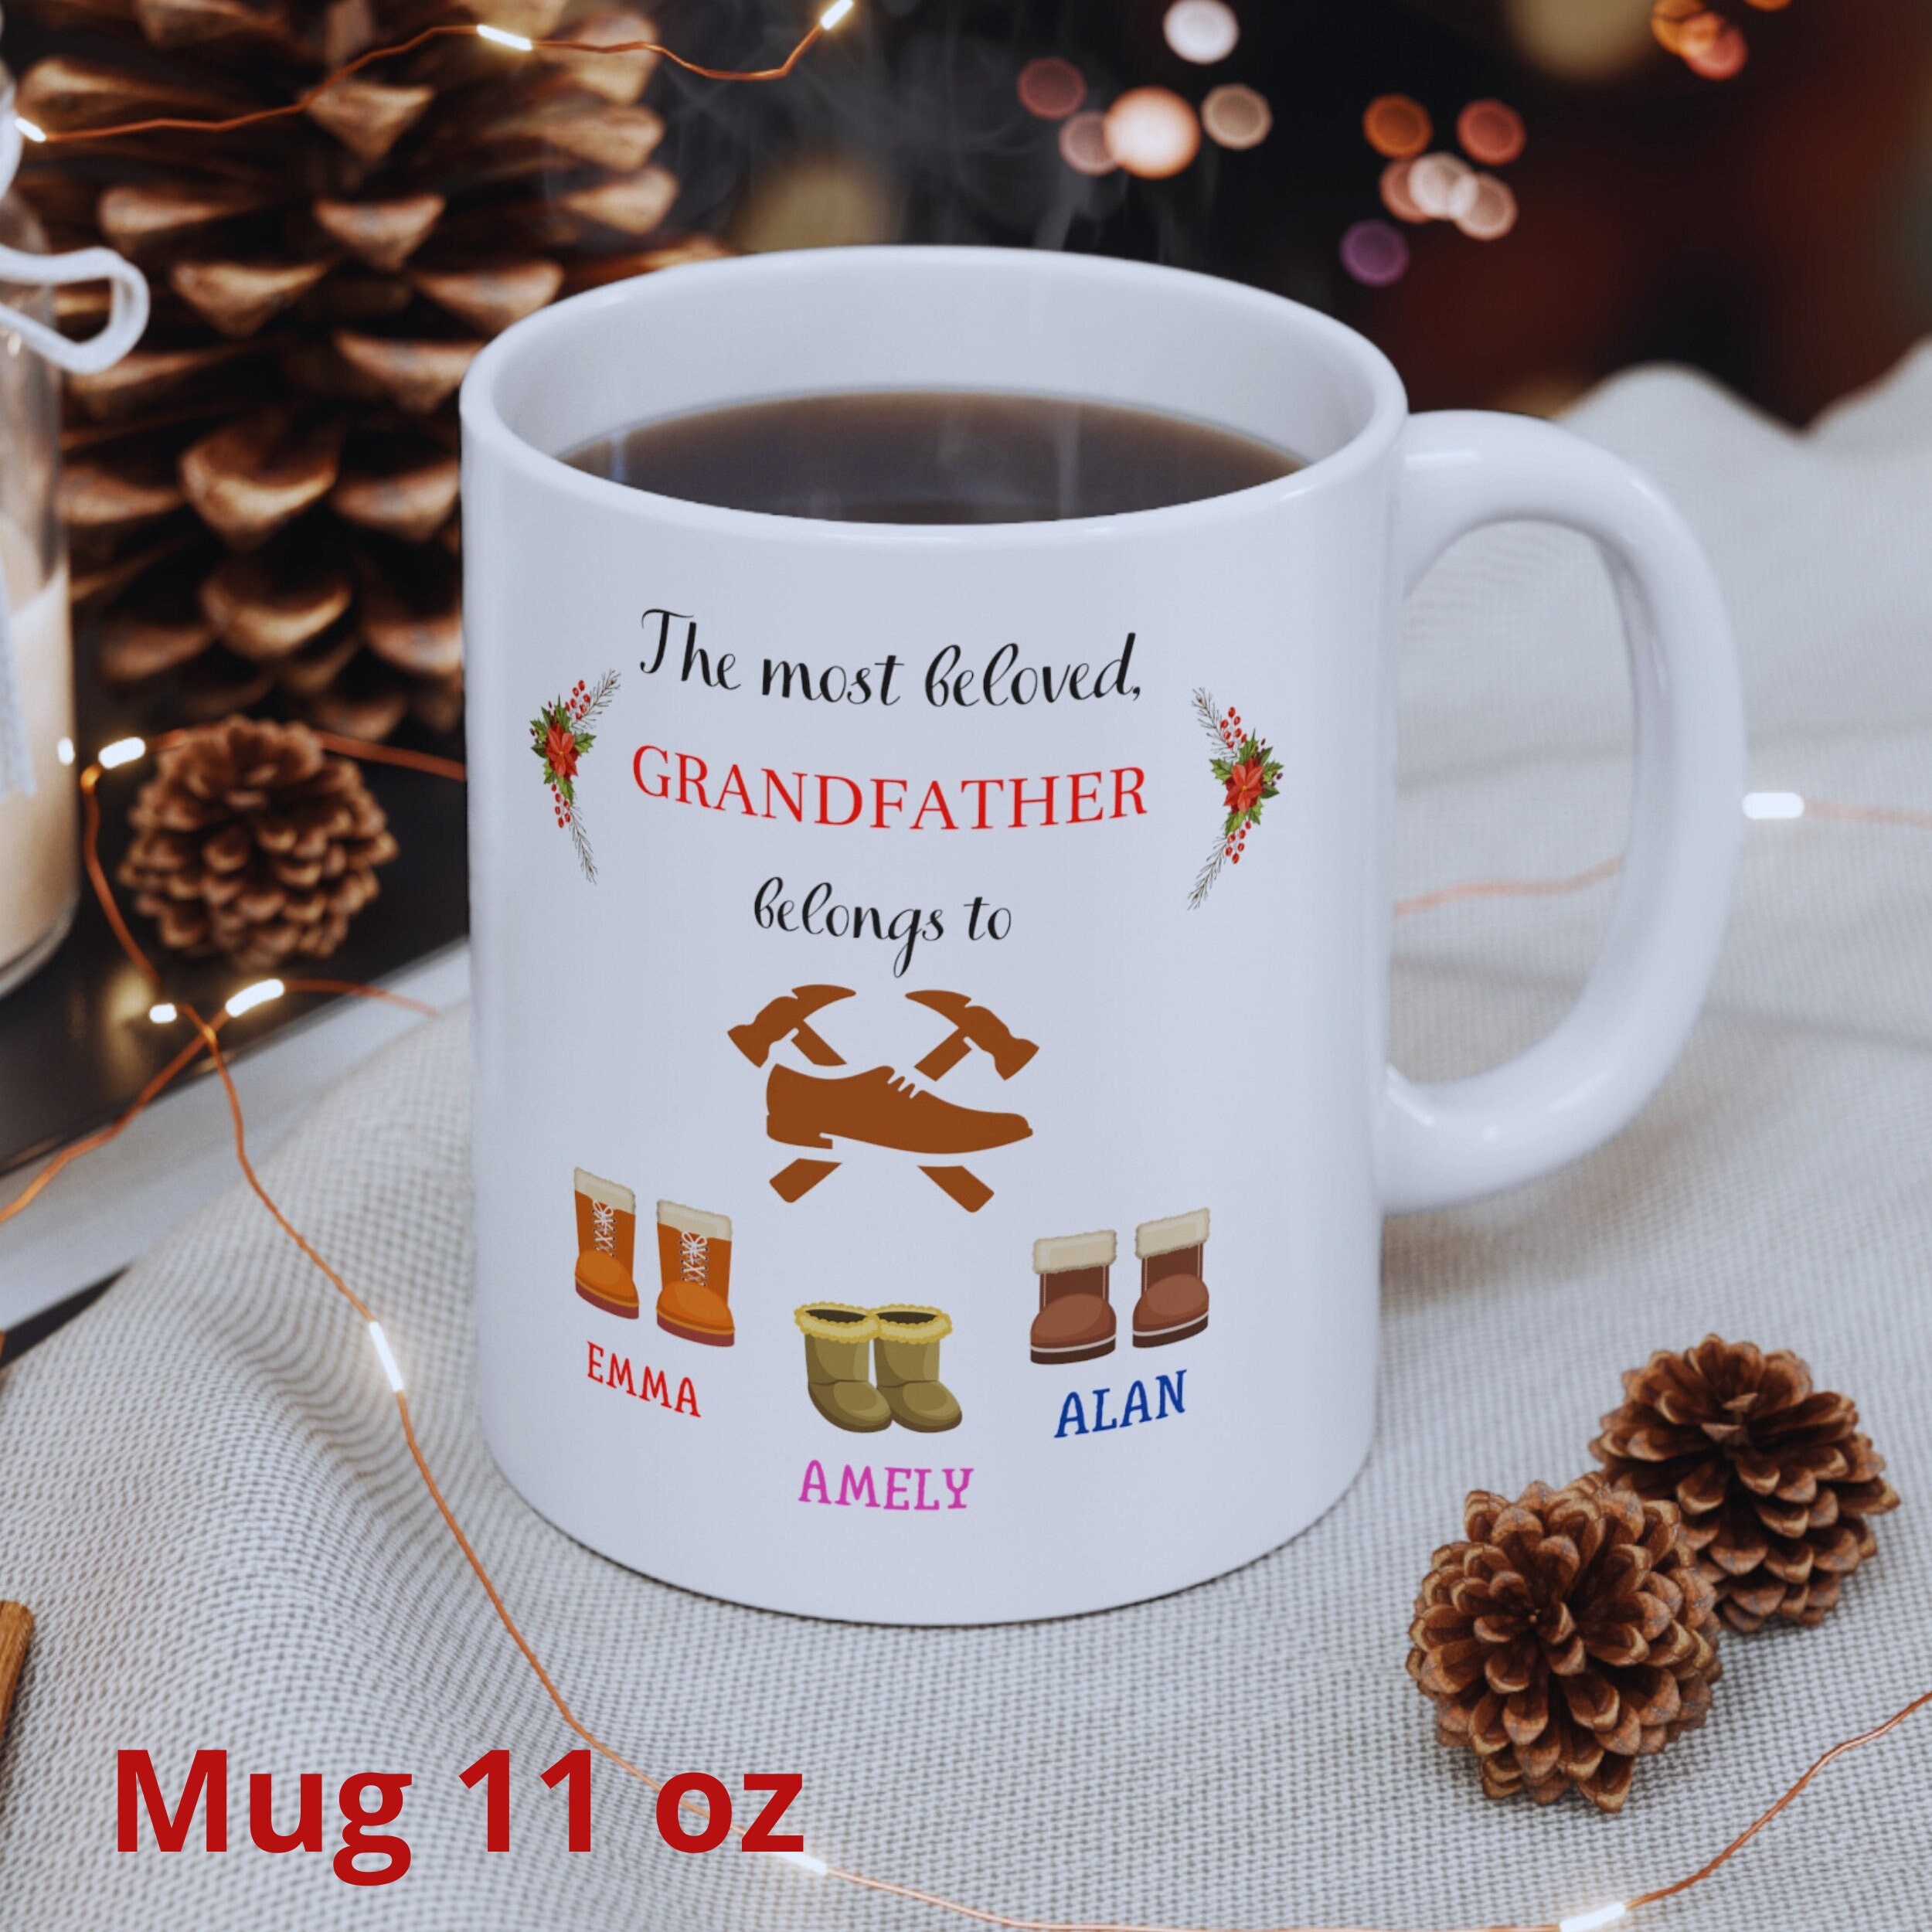 CafePress - World's Best Mamaw Mug - 11 oz Ceramic Mug - Novelty Coffee Tea  Cup